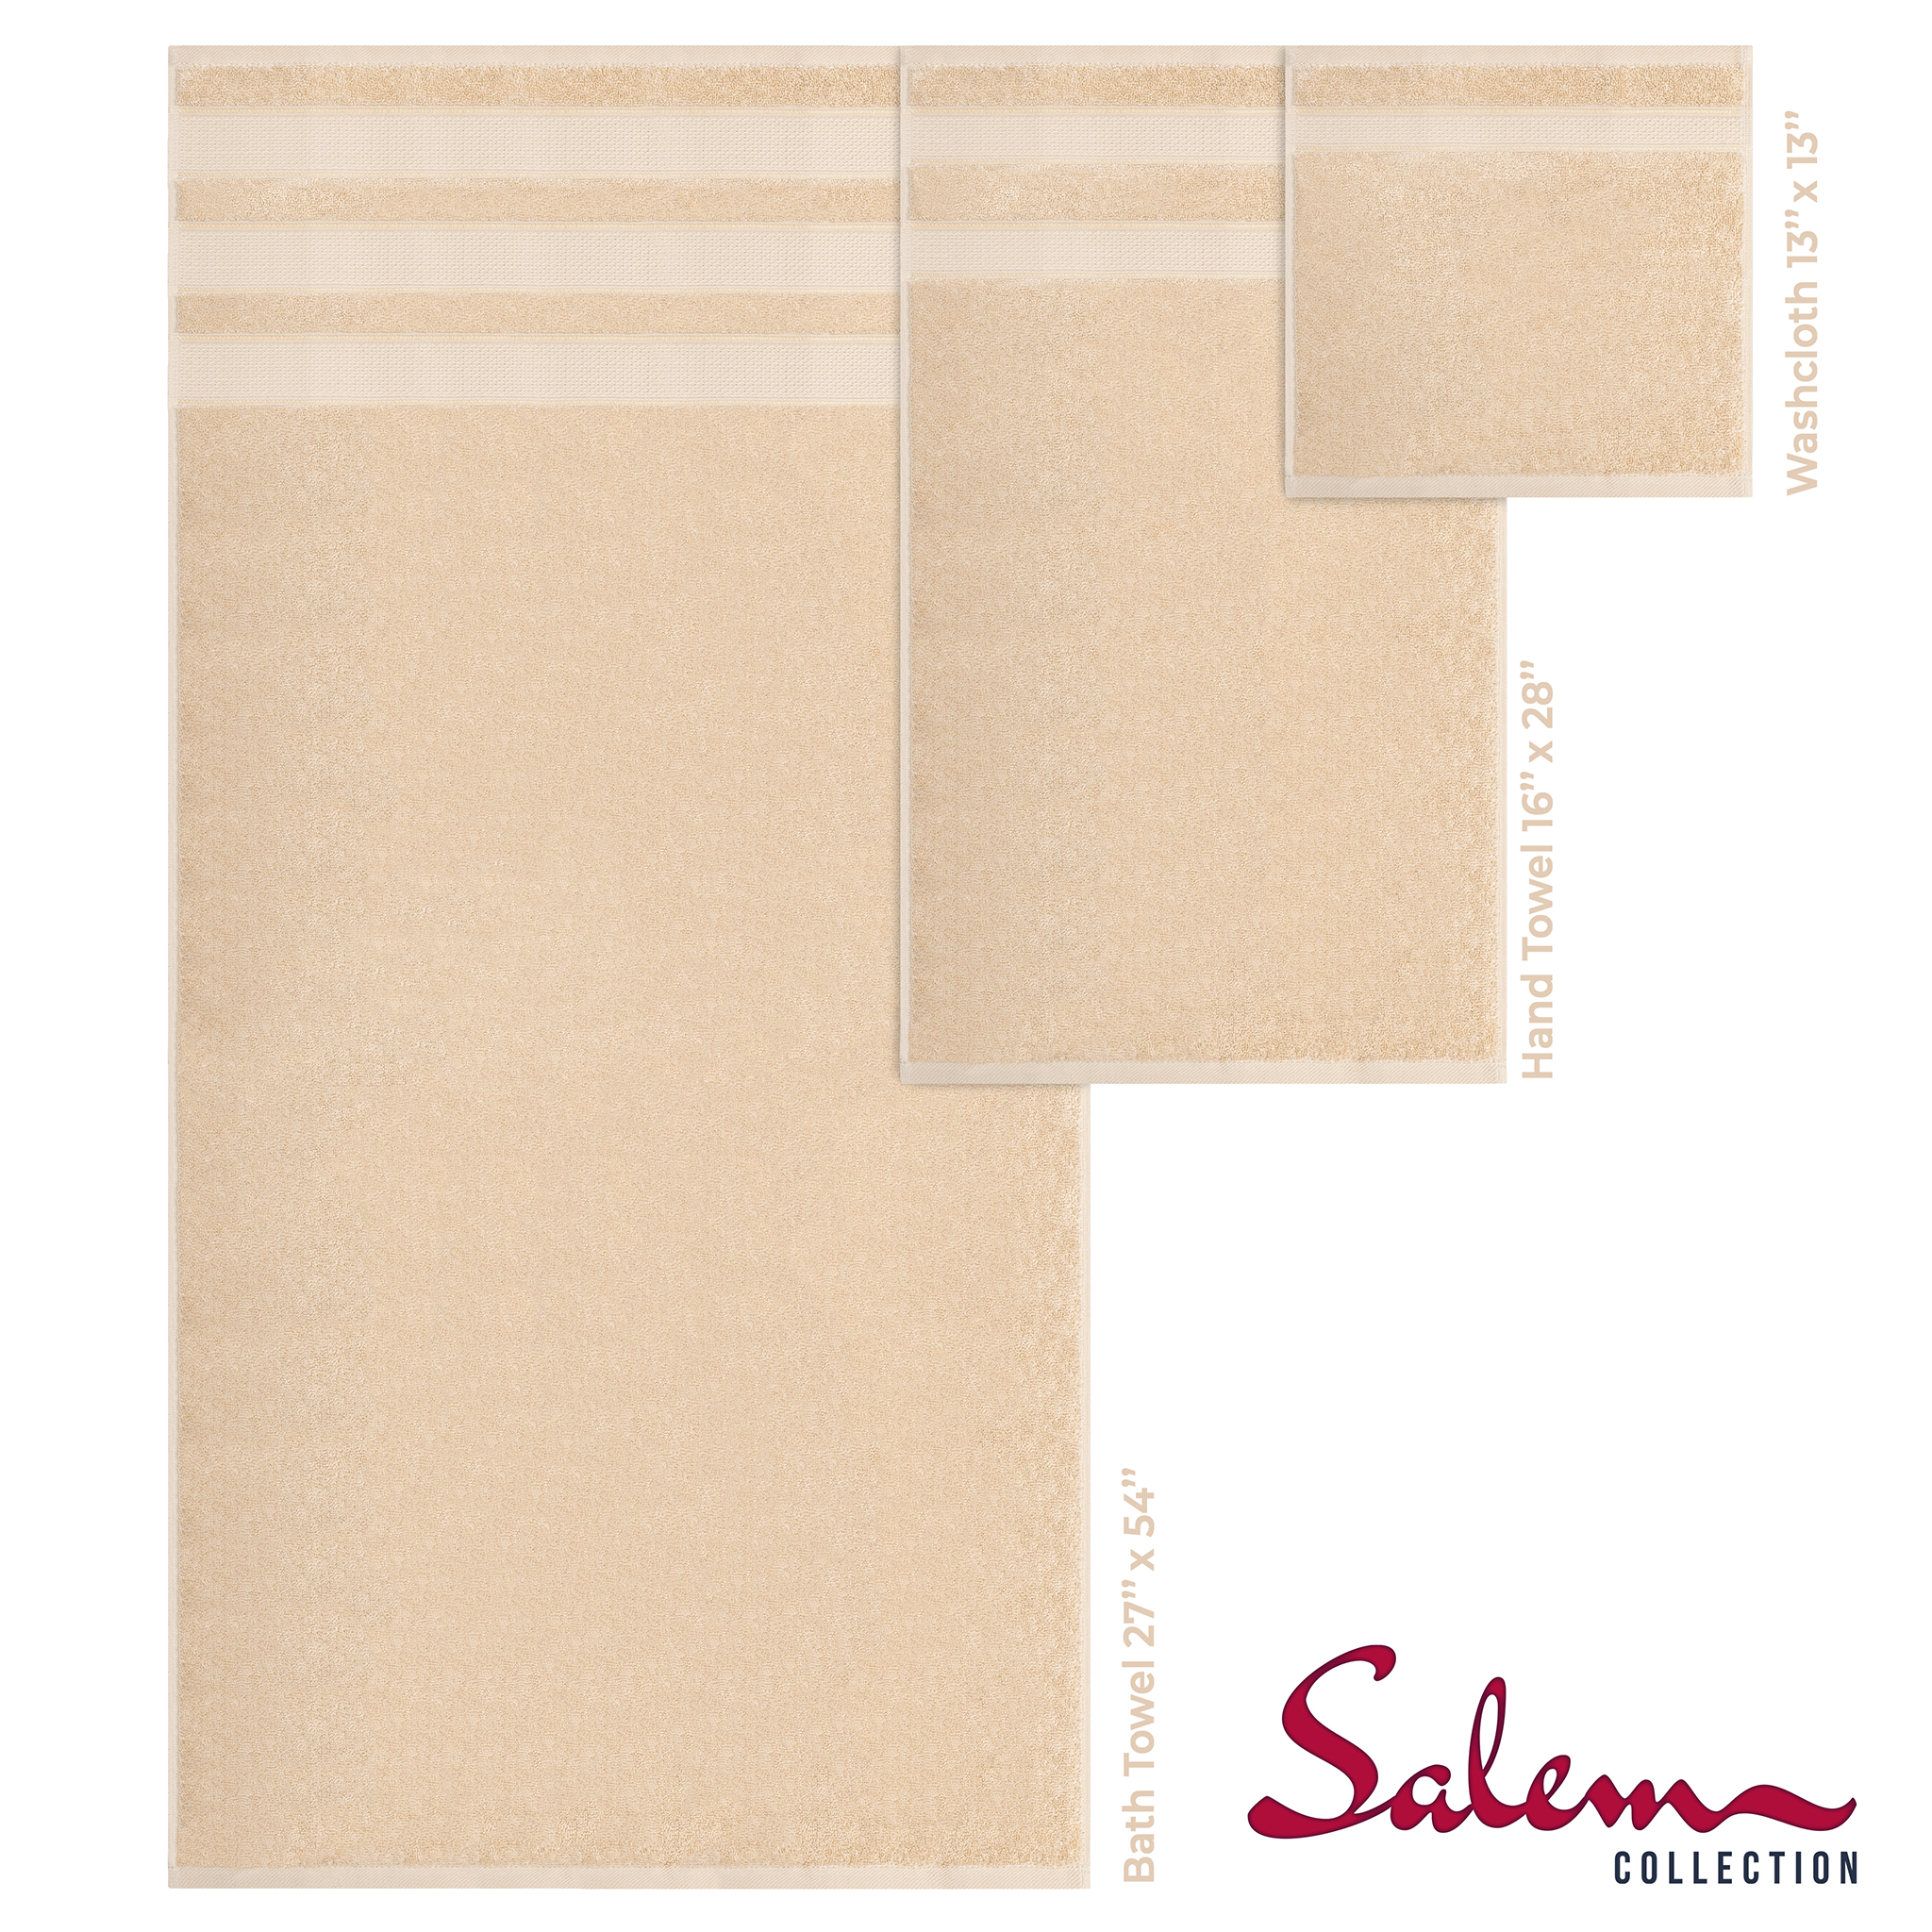 American Soft Linen - Salem 6 Piece Turkish Combed Cotton Luxury Bath Towel Set - 10 Set Case Pack - Sand-Taupe - 4